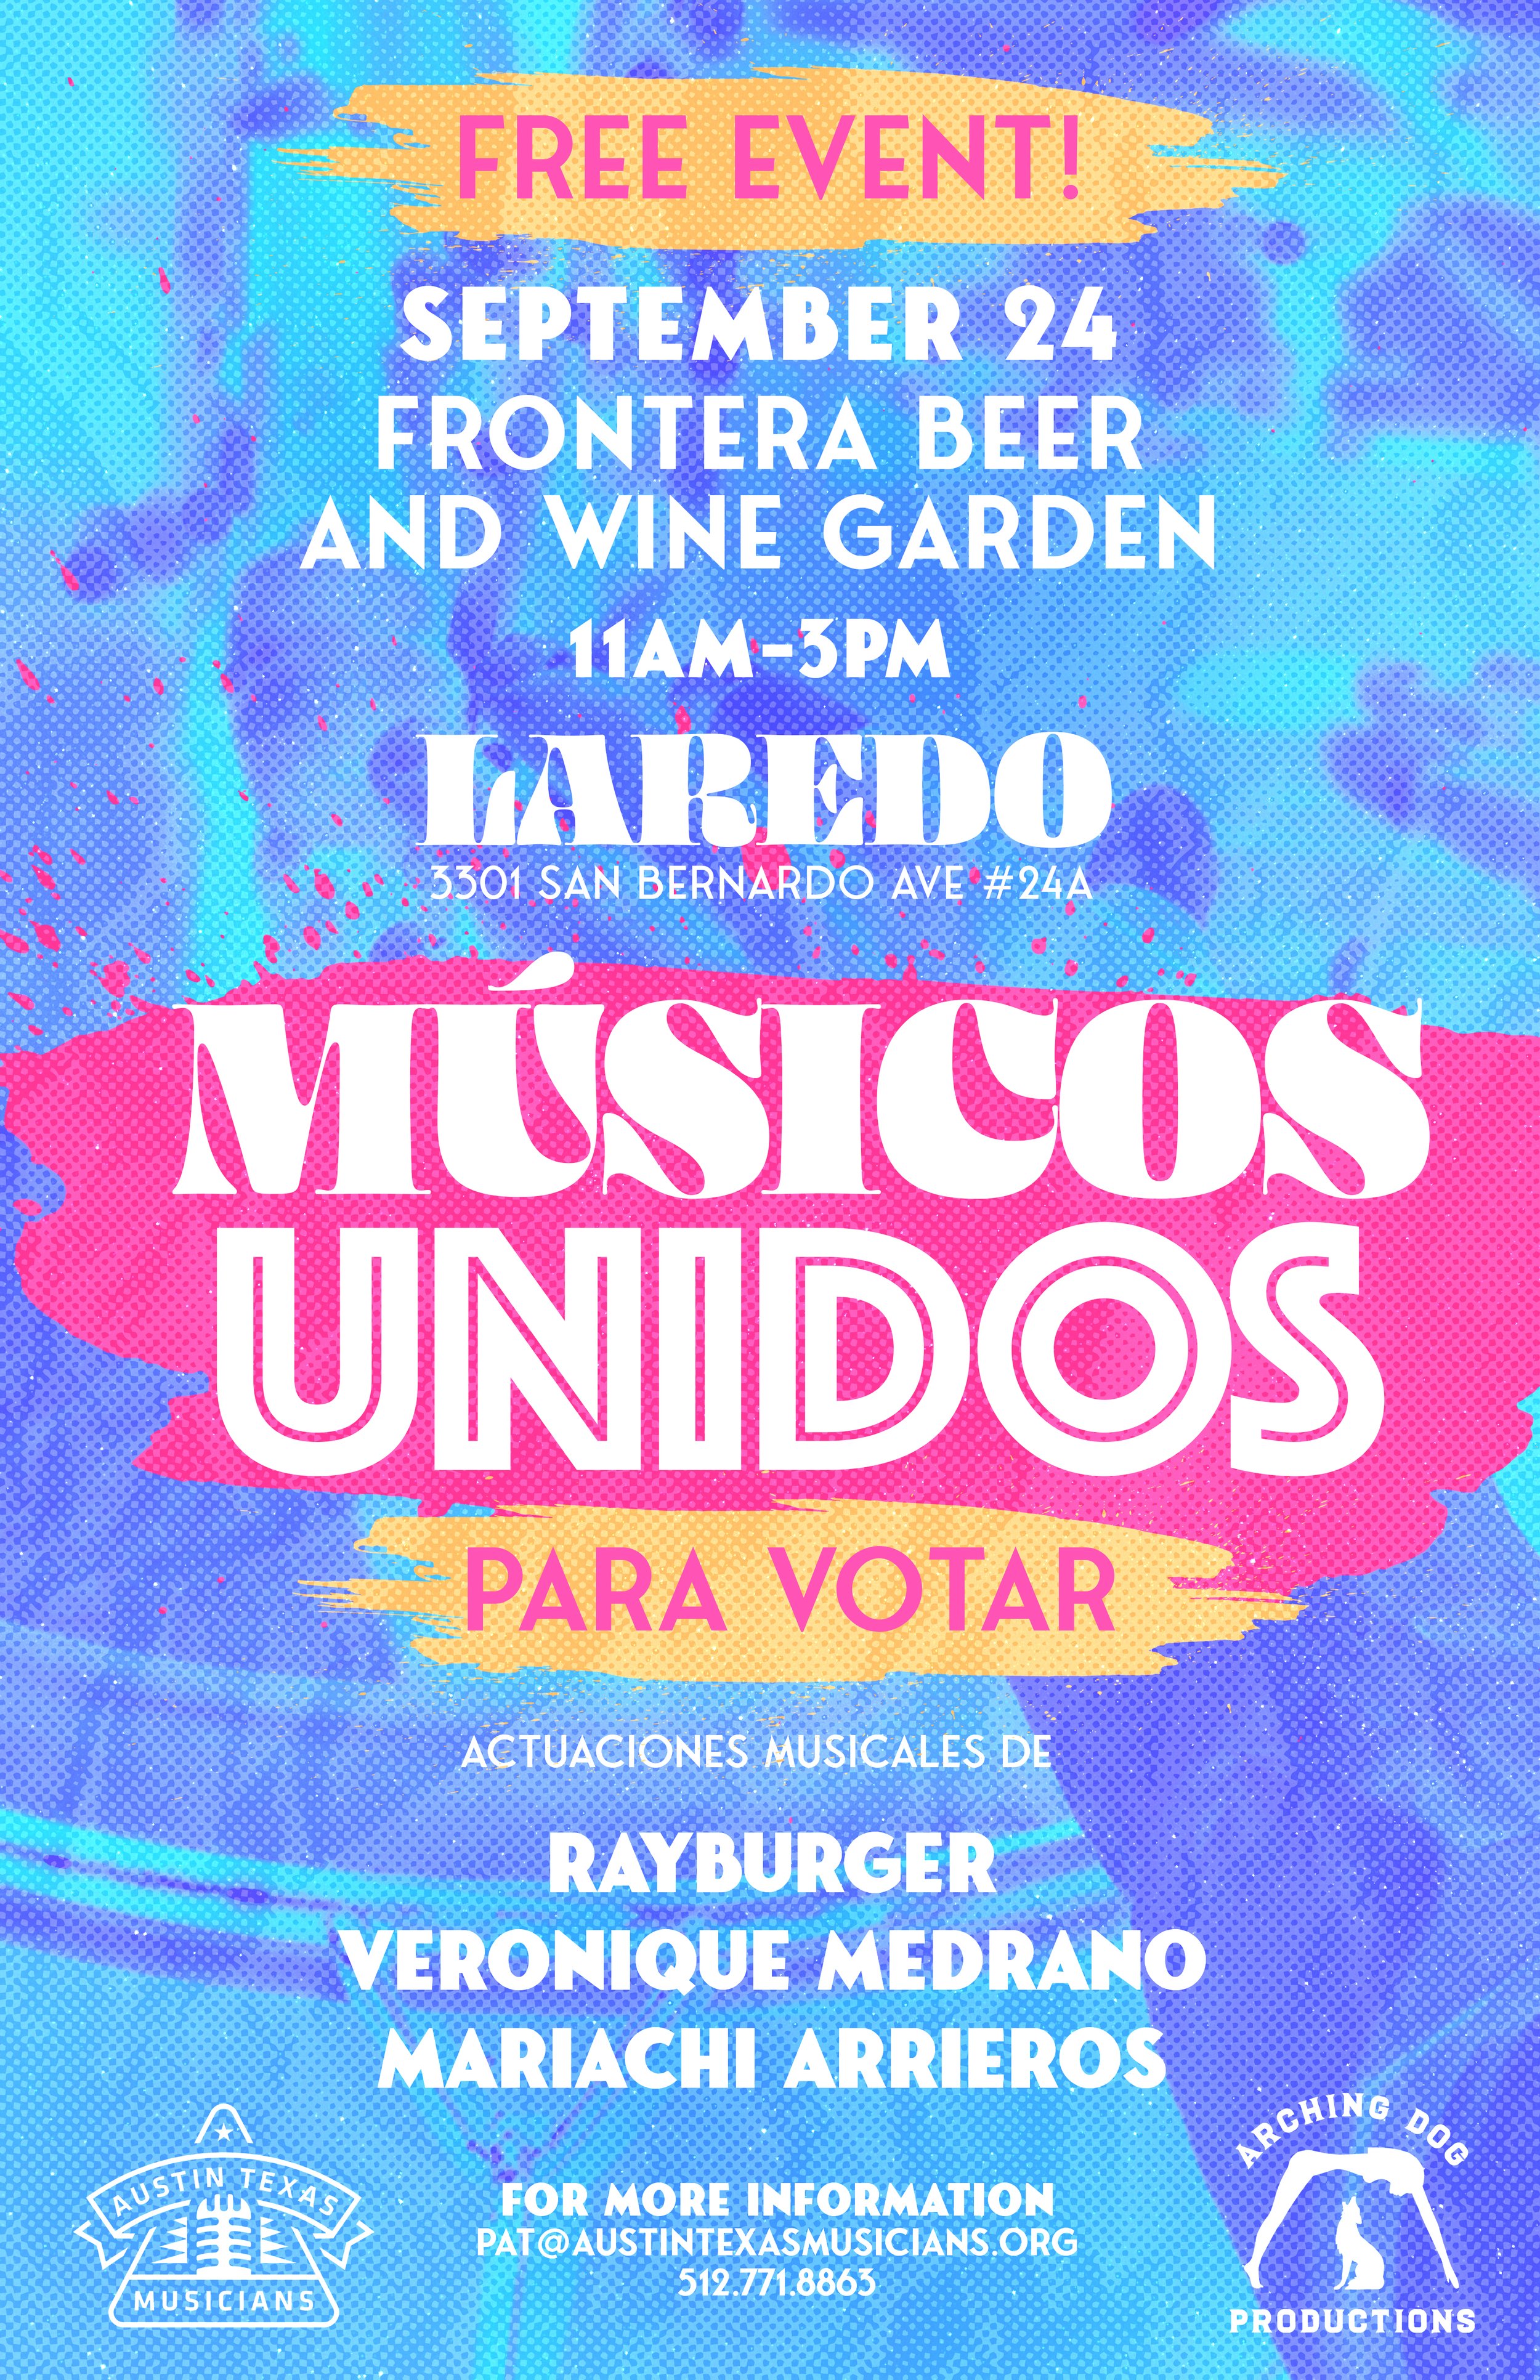 Laredomusicosunidos-poster.jpg